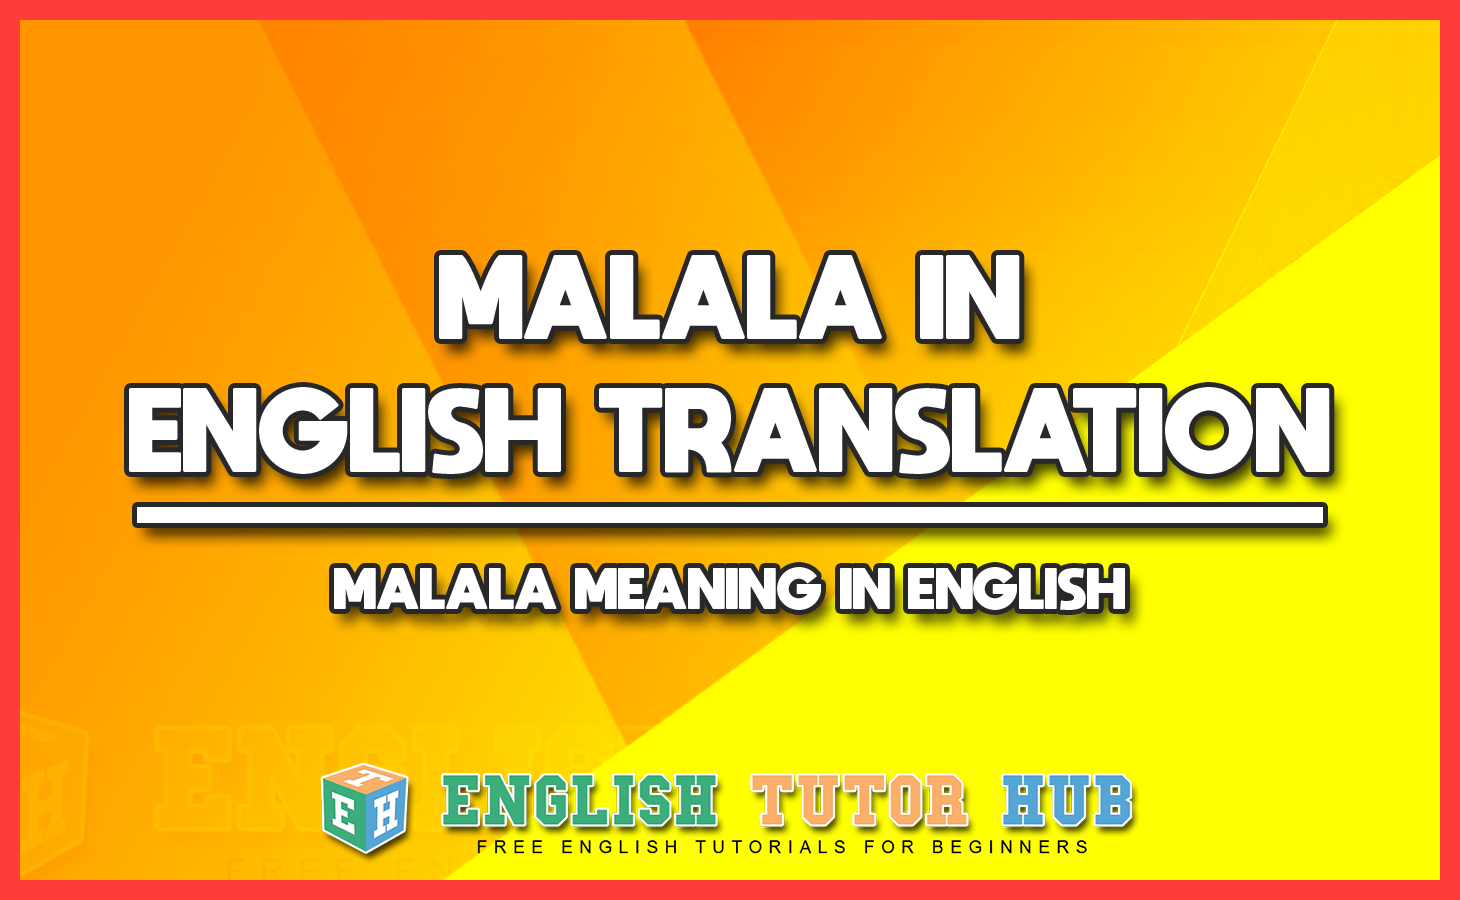 MALALA IN ENGLISH TRANSLATION - MALALA MEANING IN ENGLISH